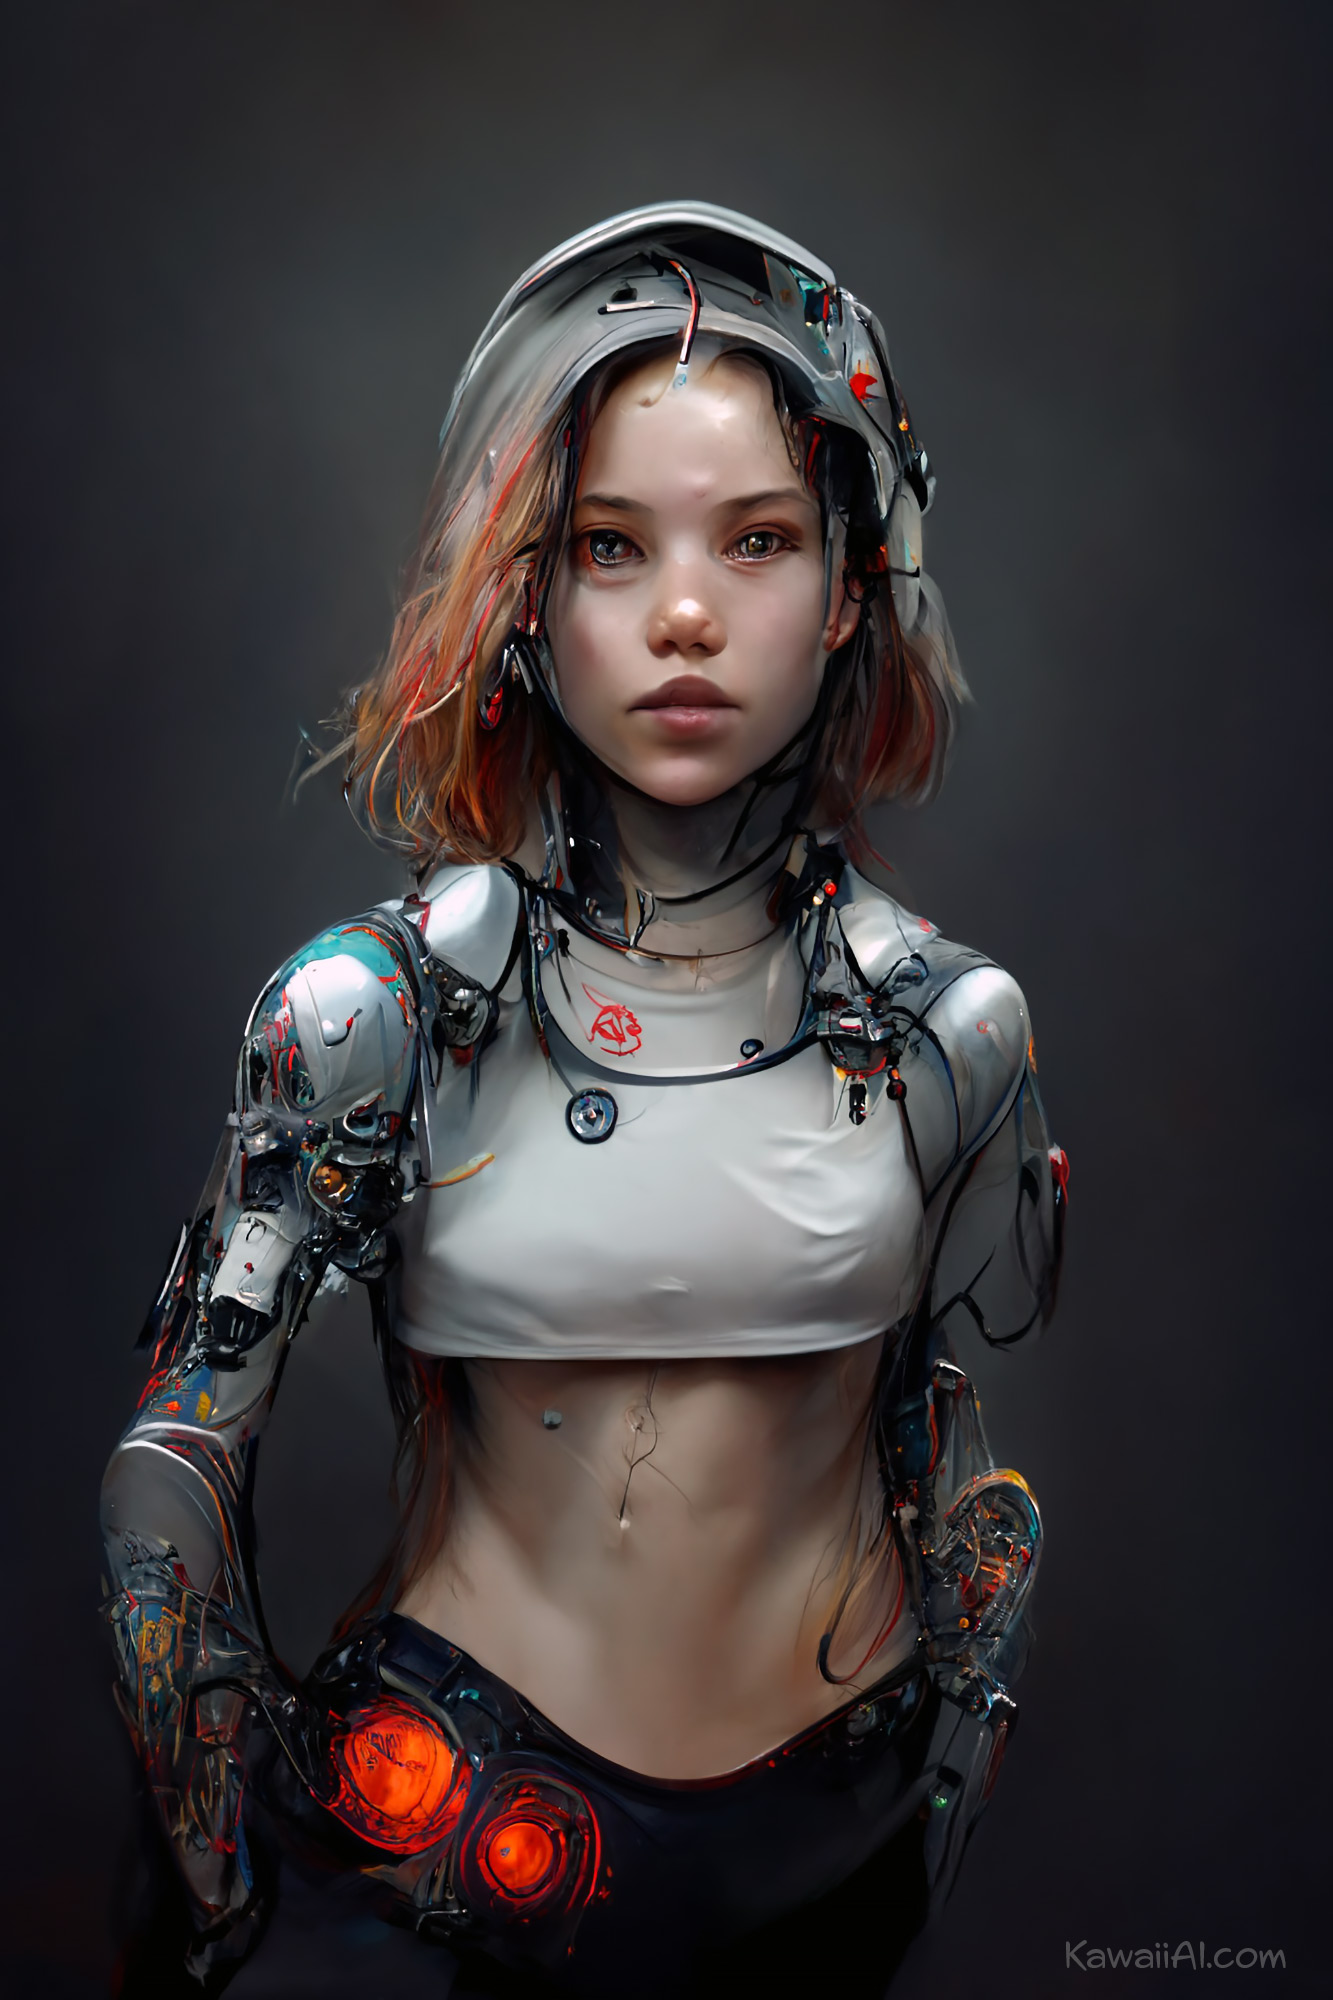 Futuristic digital art representation of Artificial Intelligence